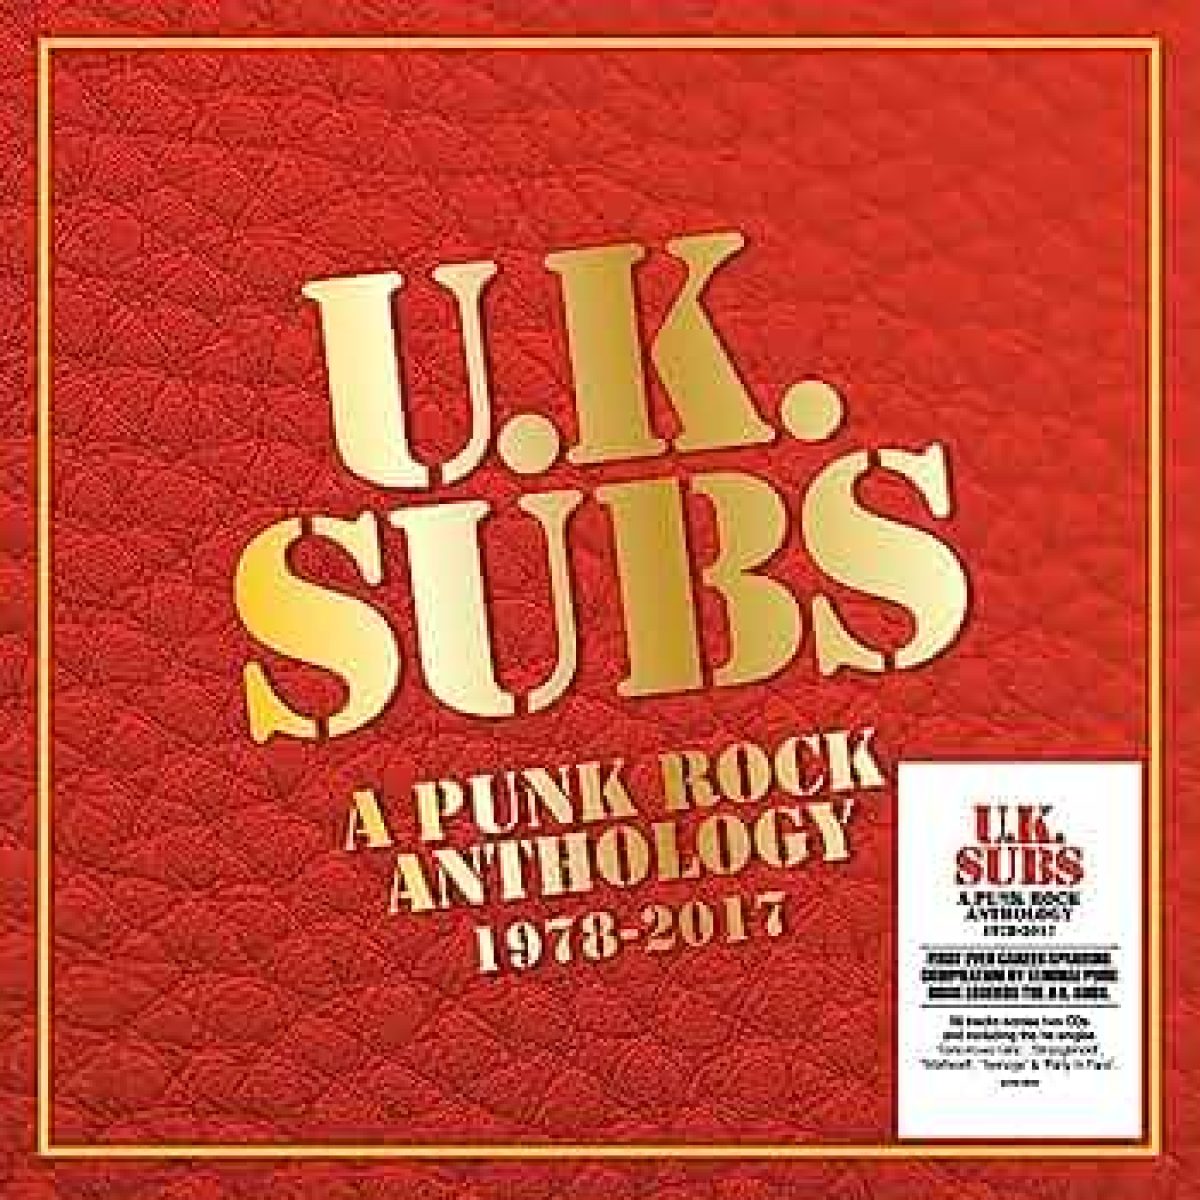 U.K.Subs, A Punk Rock Anthology 1978-2017